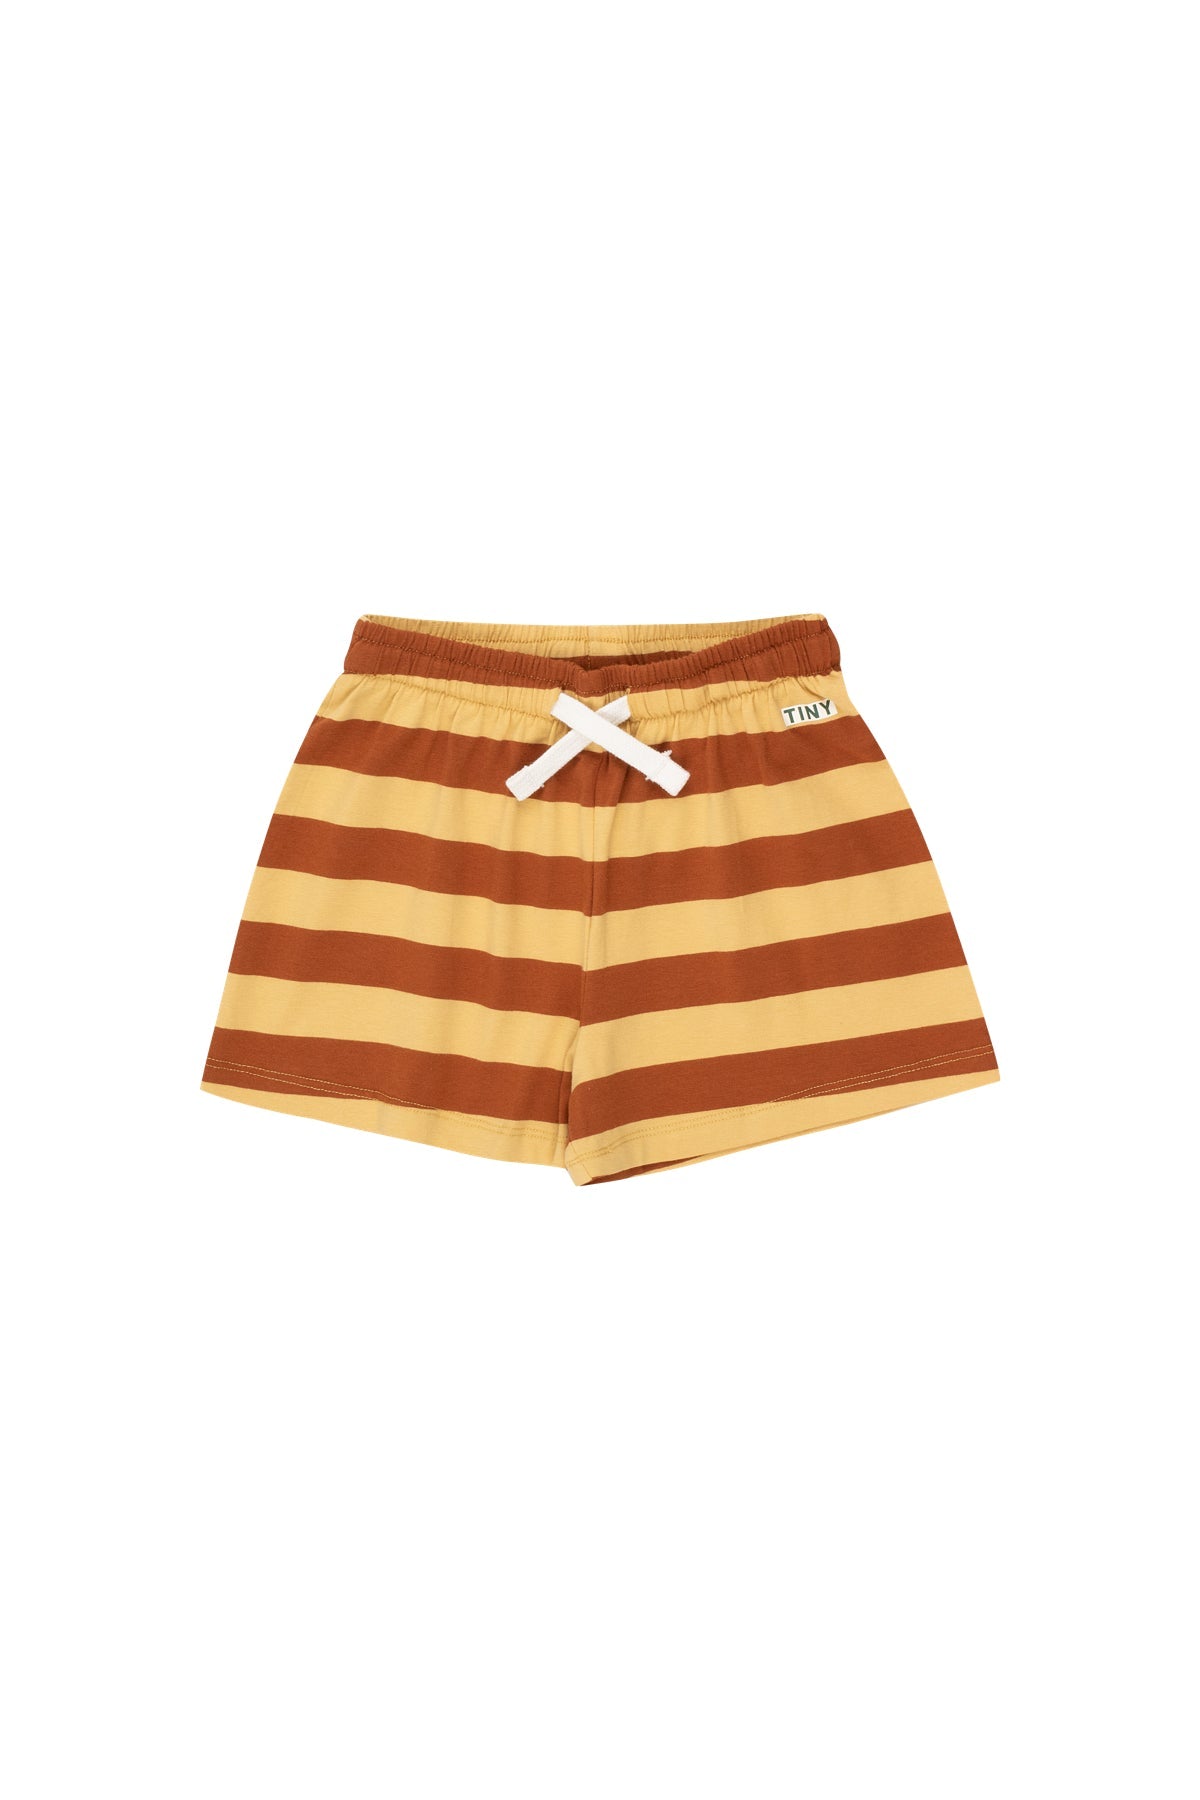 Stripes Shorts - Tiny Cottons